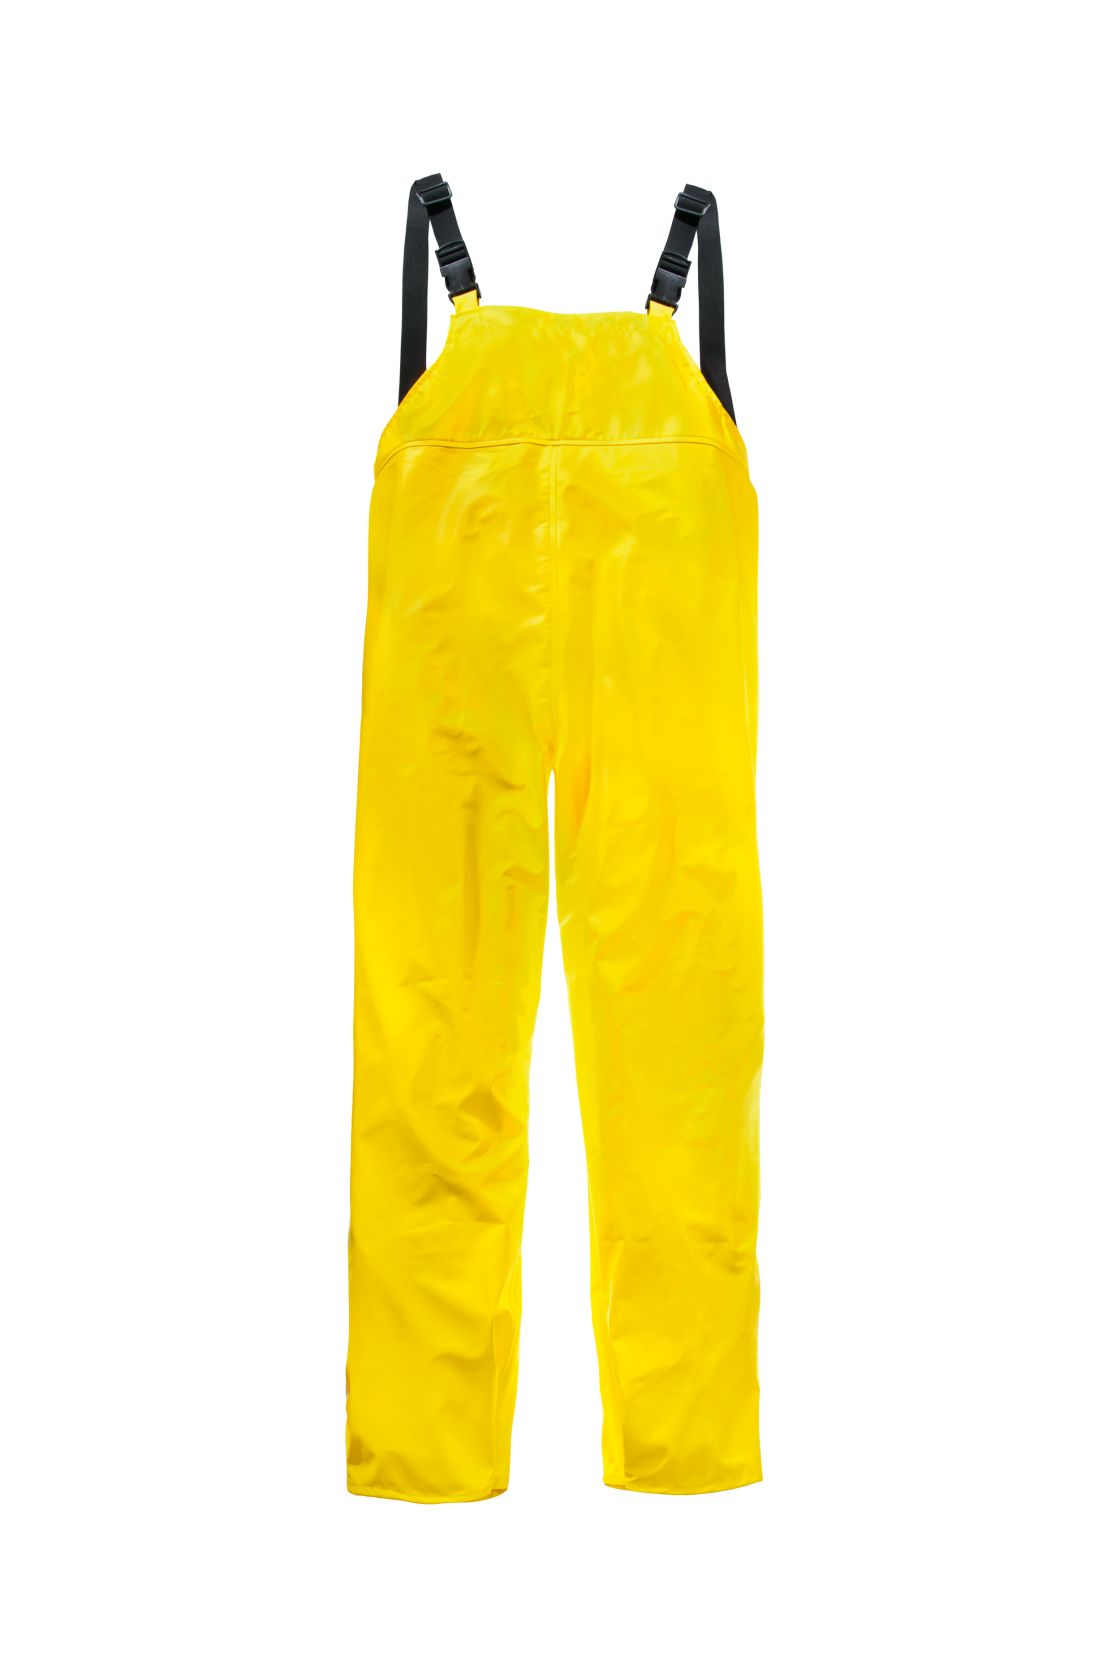 PU-Regenlatzhose, gelb gelb